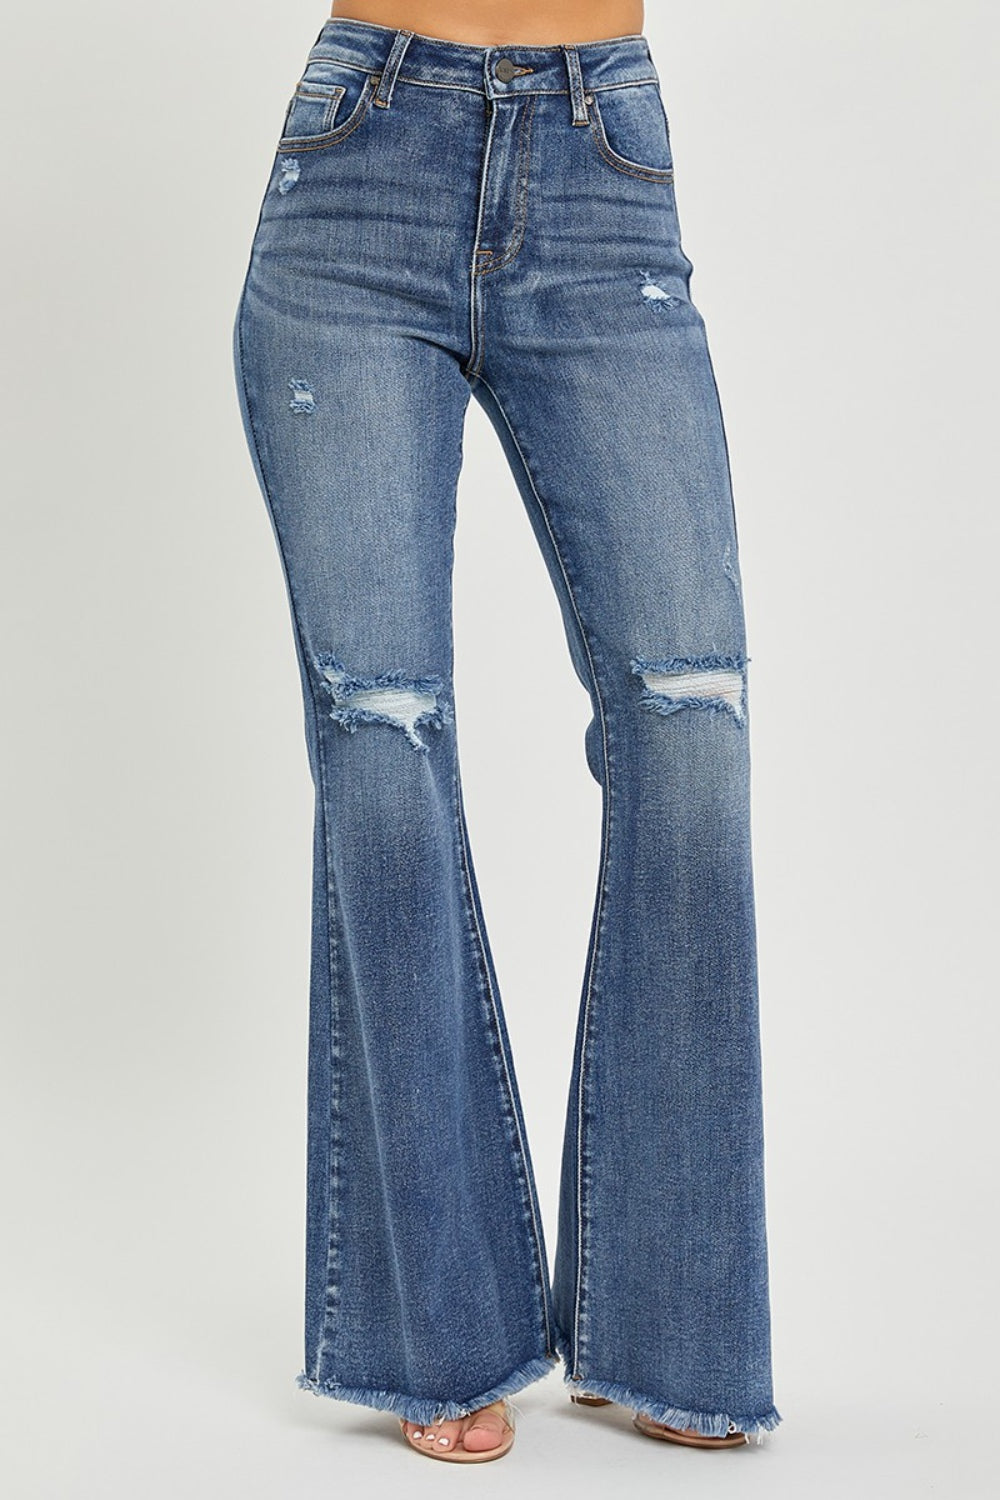 RISEN High Waist Distressed Fare Jeans